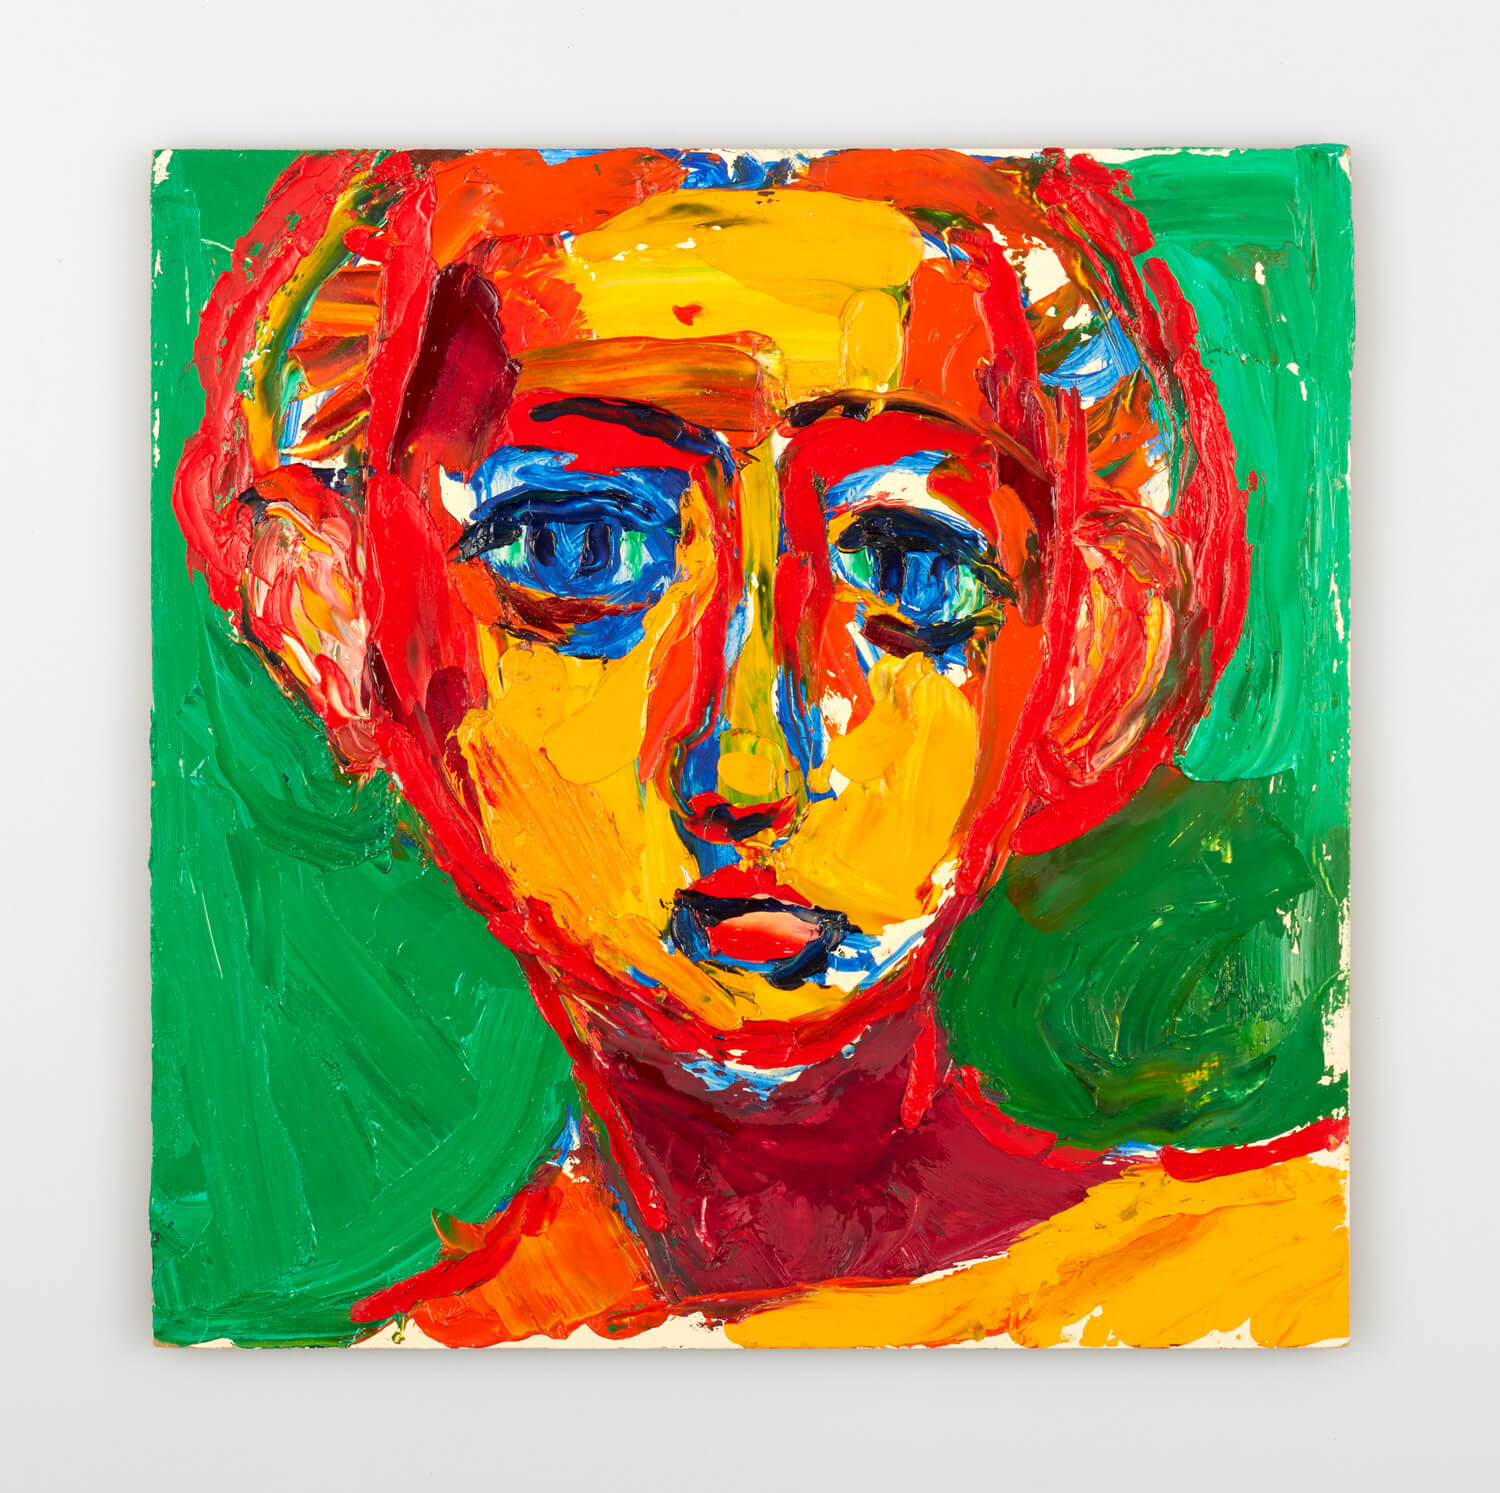 JB242 - Woman's Head - 1993 - 30 x 26 cm - Oil on panel